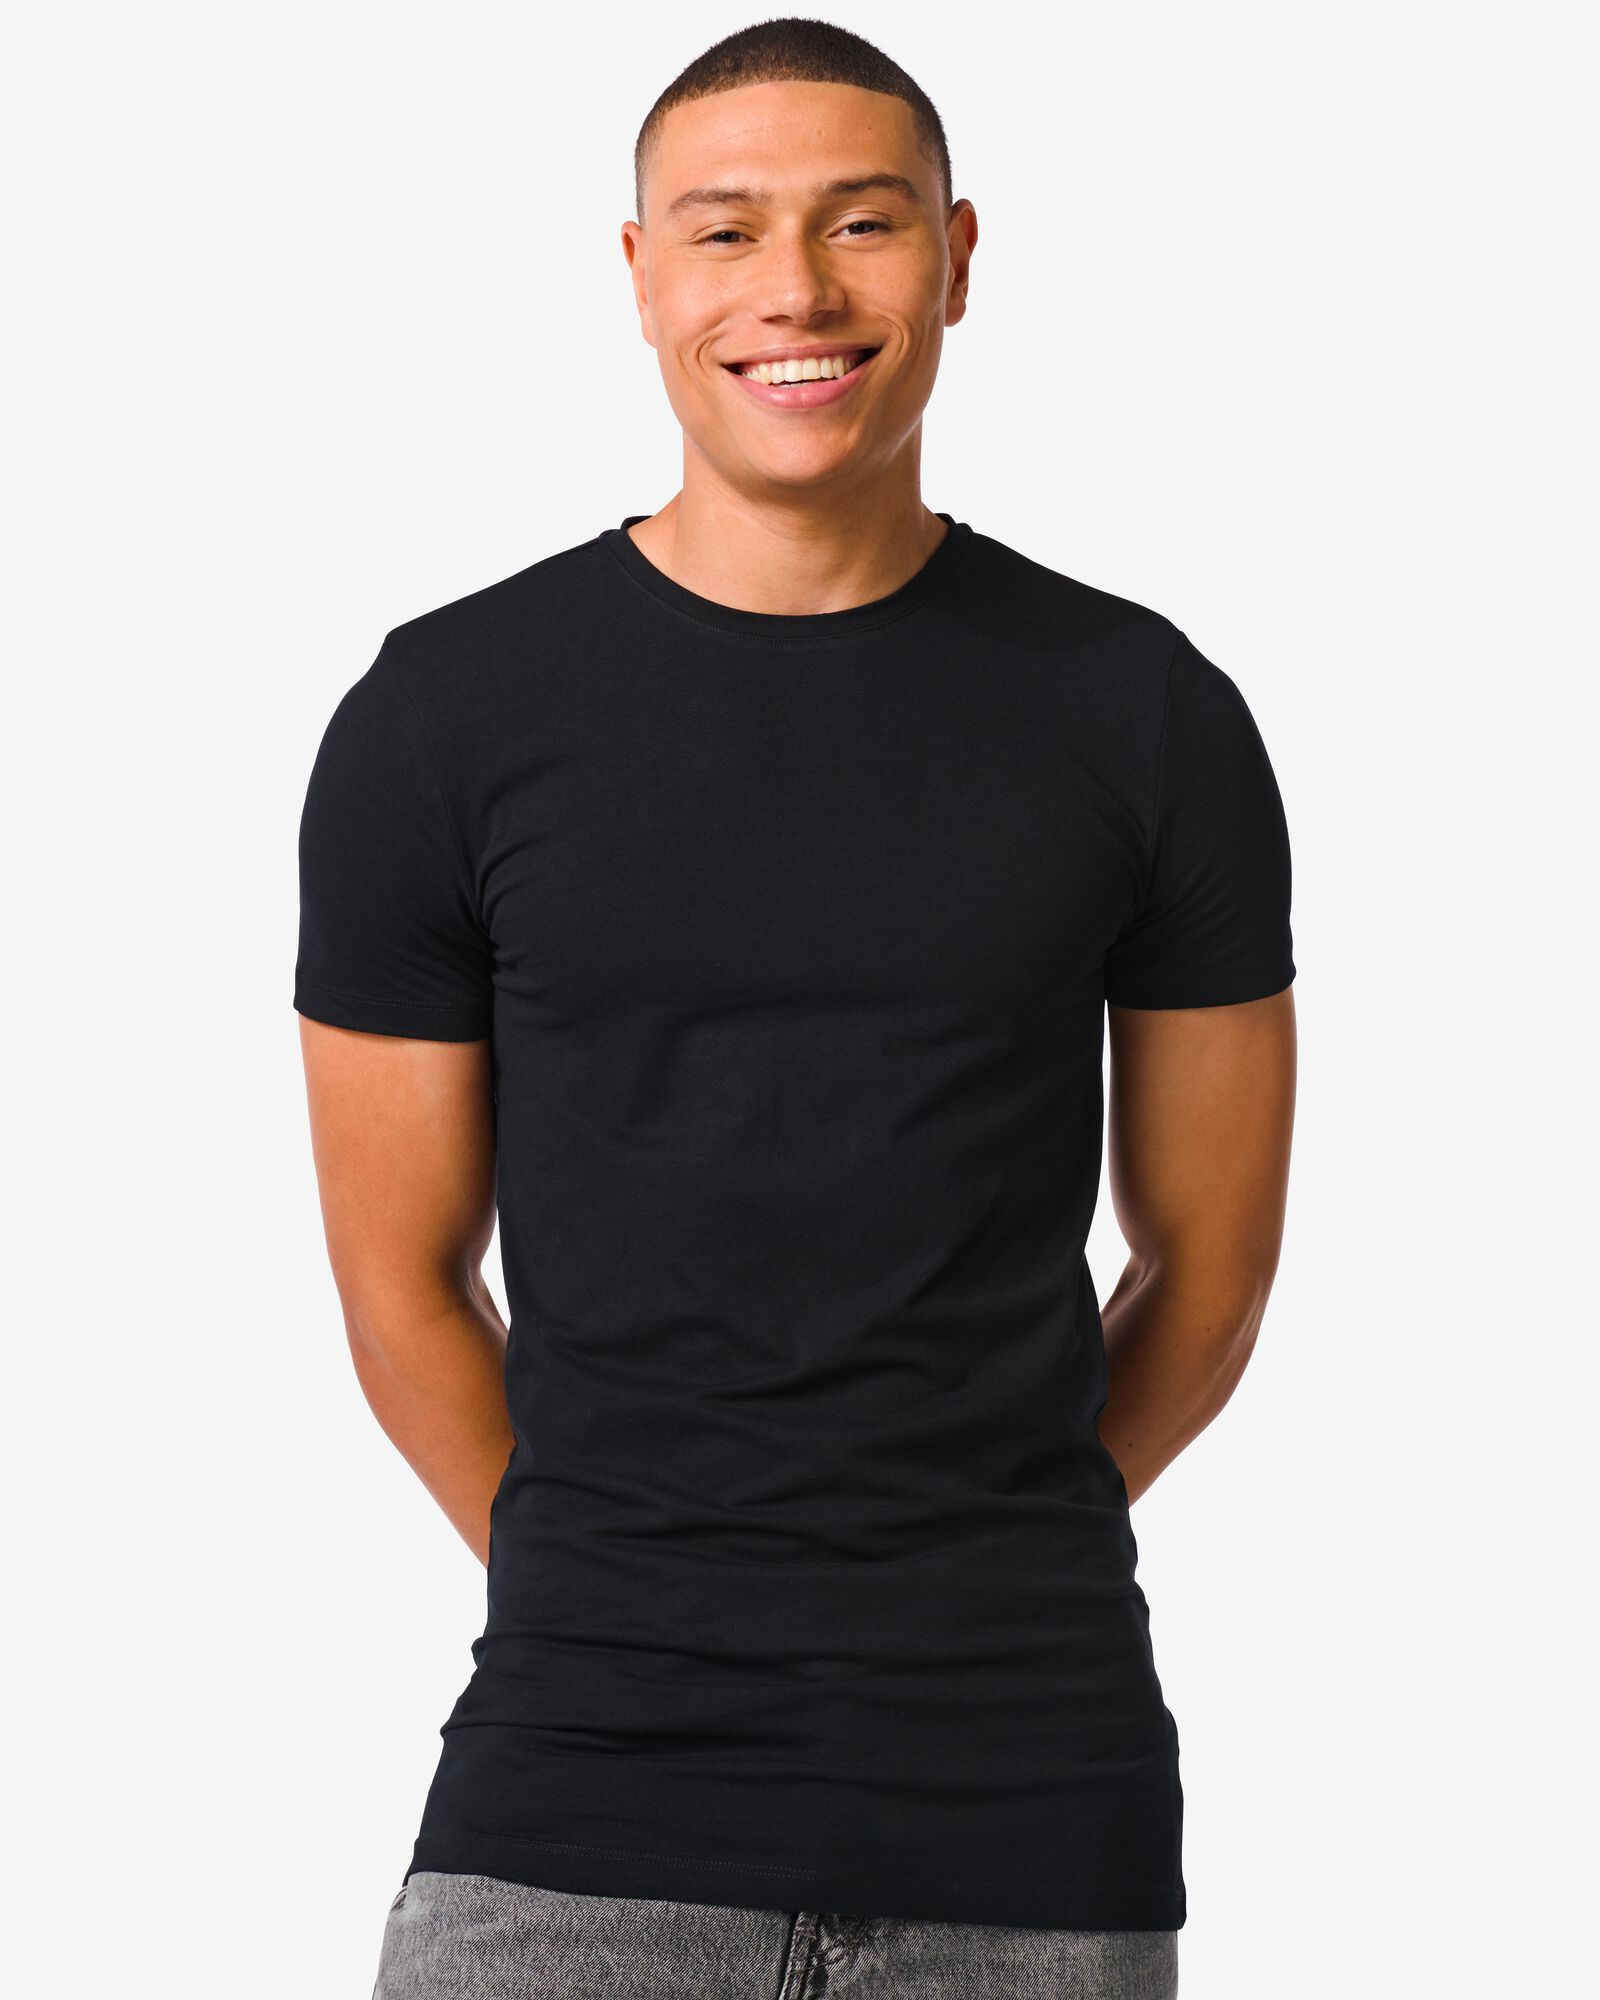 Image of HEMA Heren T-shirt Slim Fit O-hals Extra Lang Zwart (zwart)